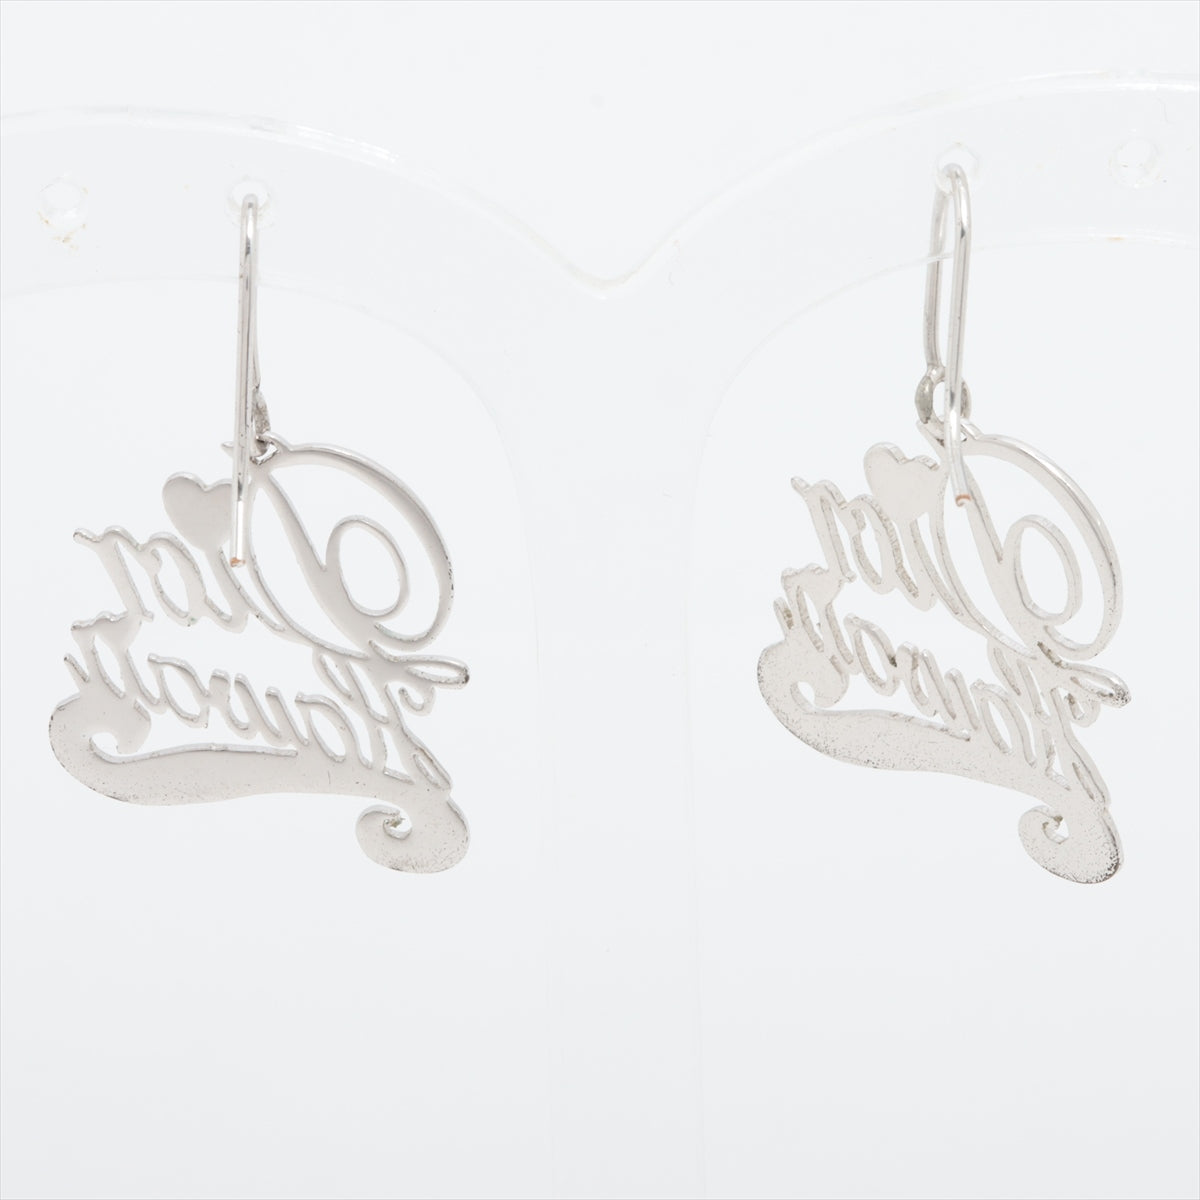 Dior Dior logo Earrings (For Both Ears) metal Silver Silhouette